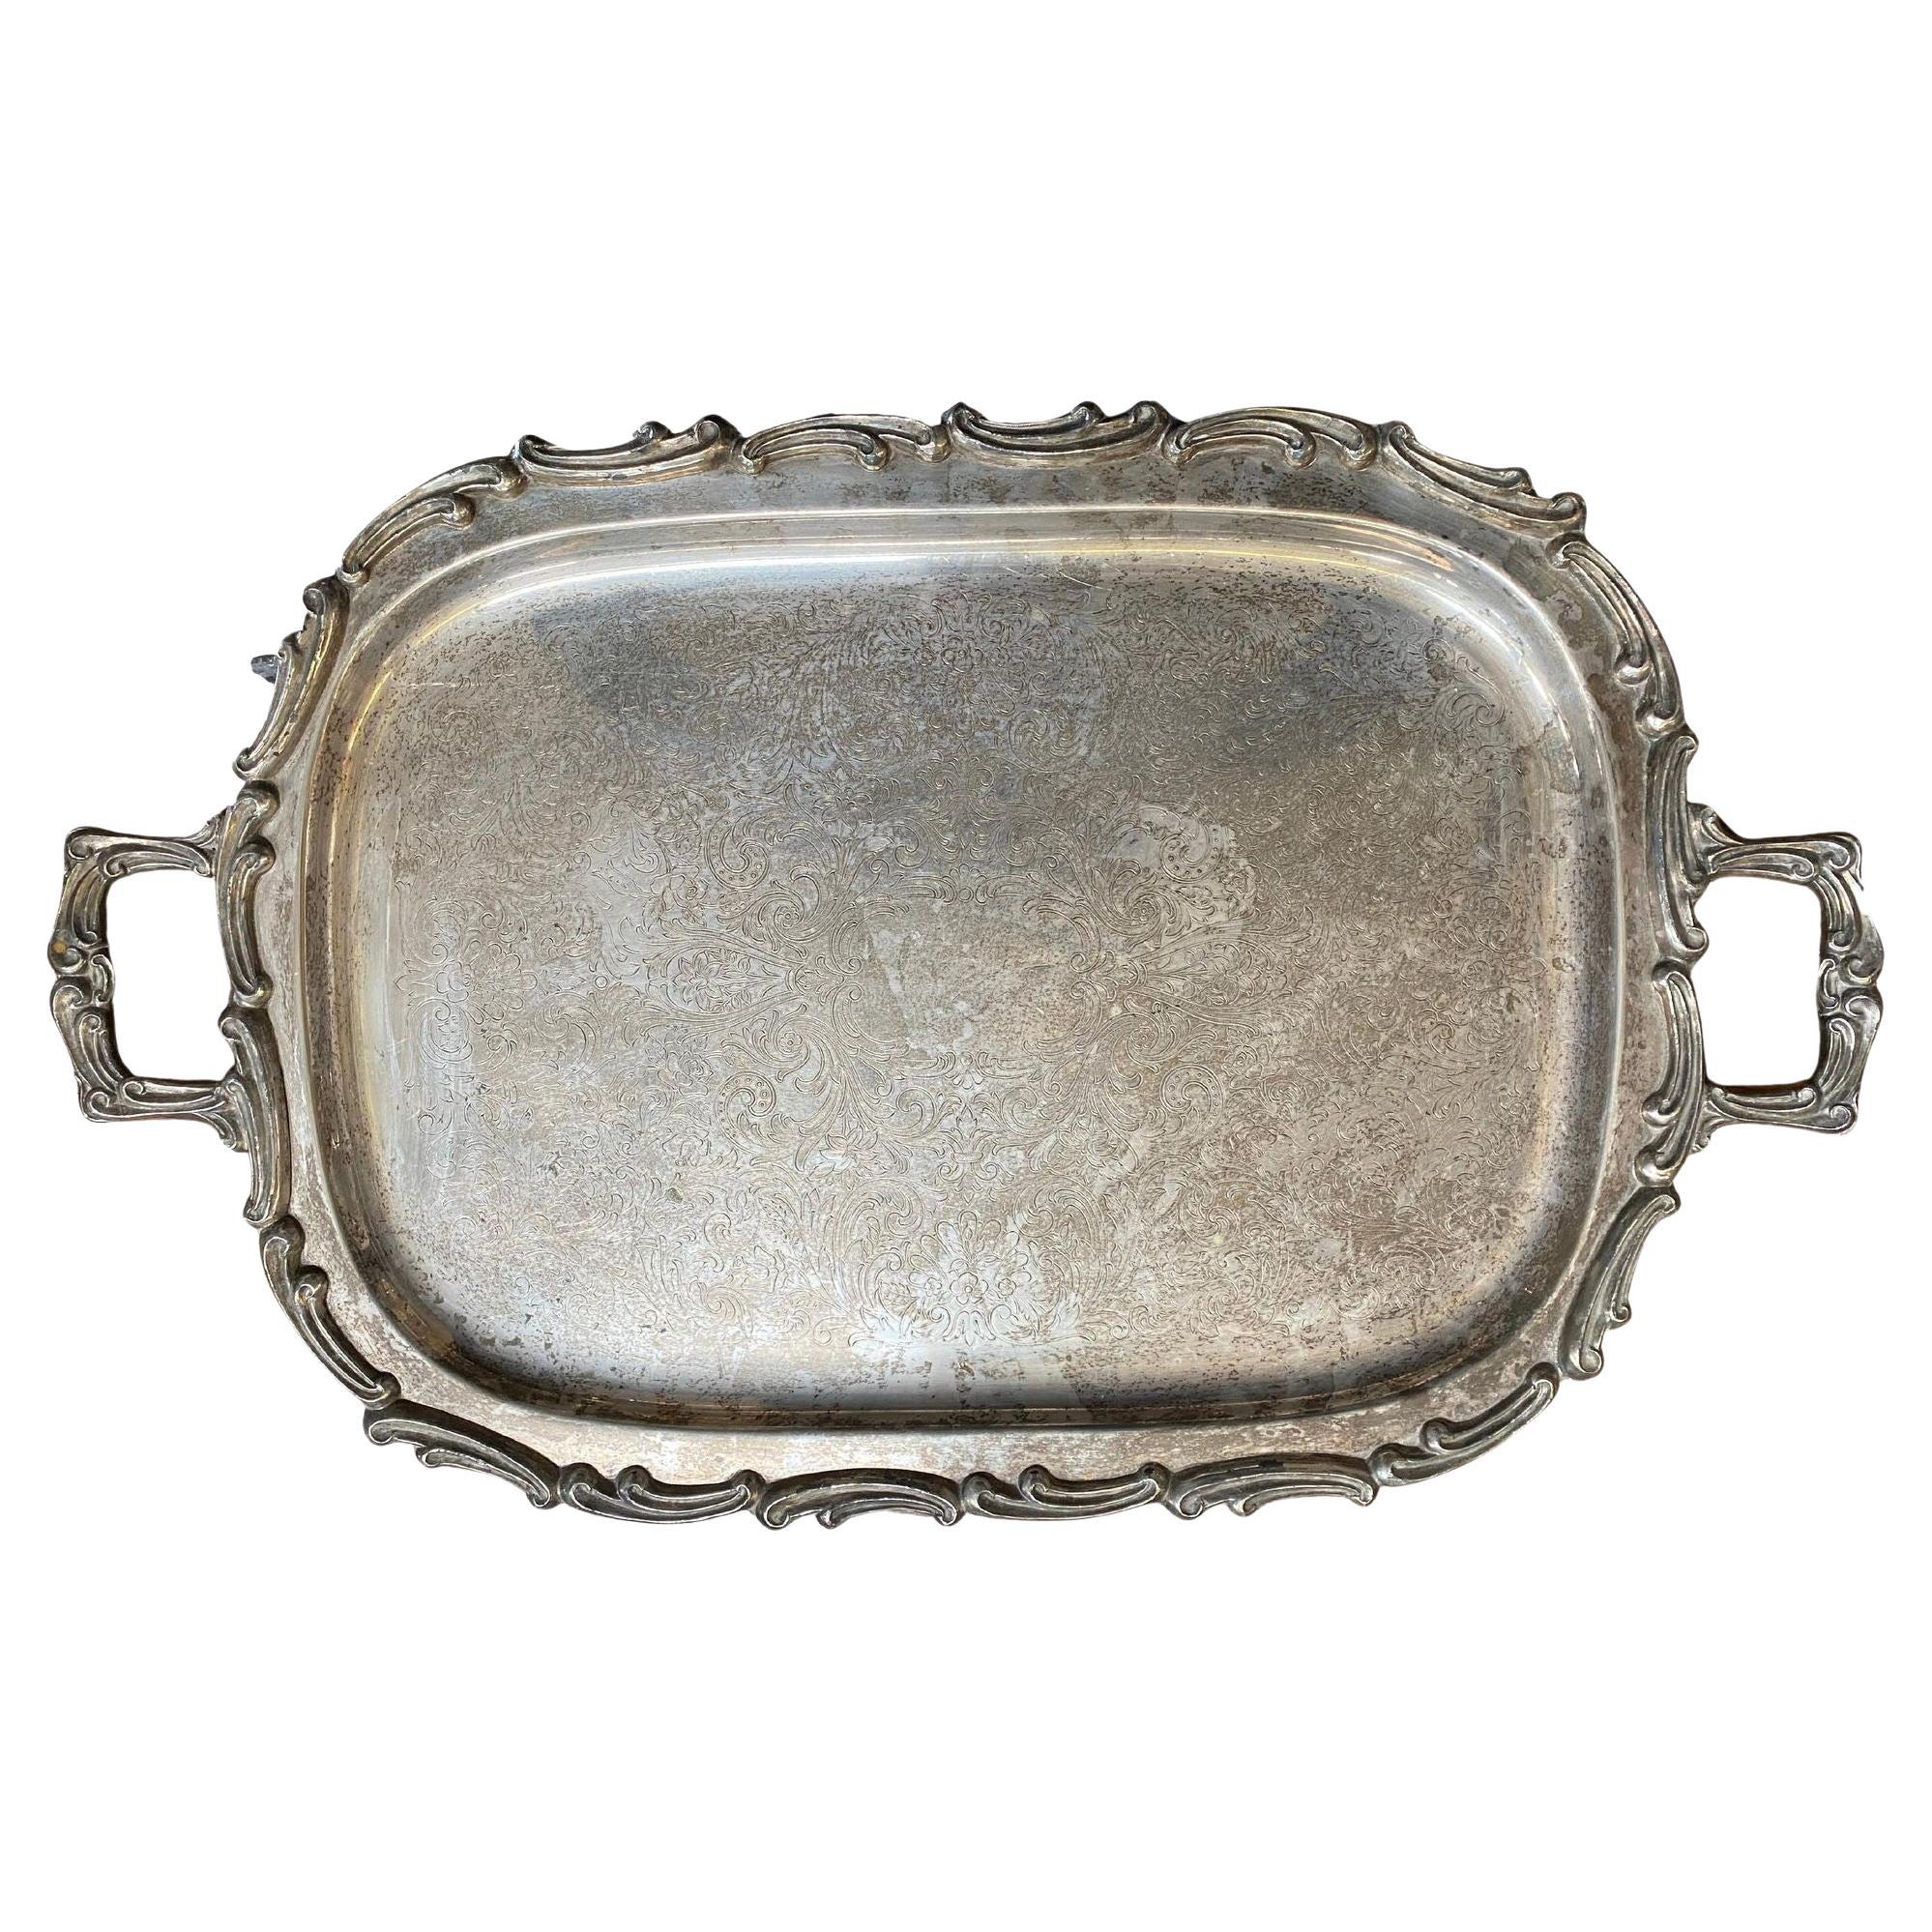 1900 Edwardian Silver-plate Serving Tray by Leonard